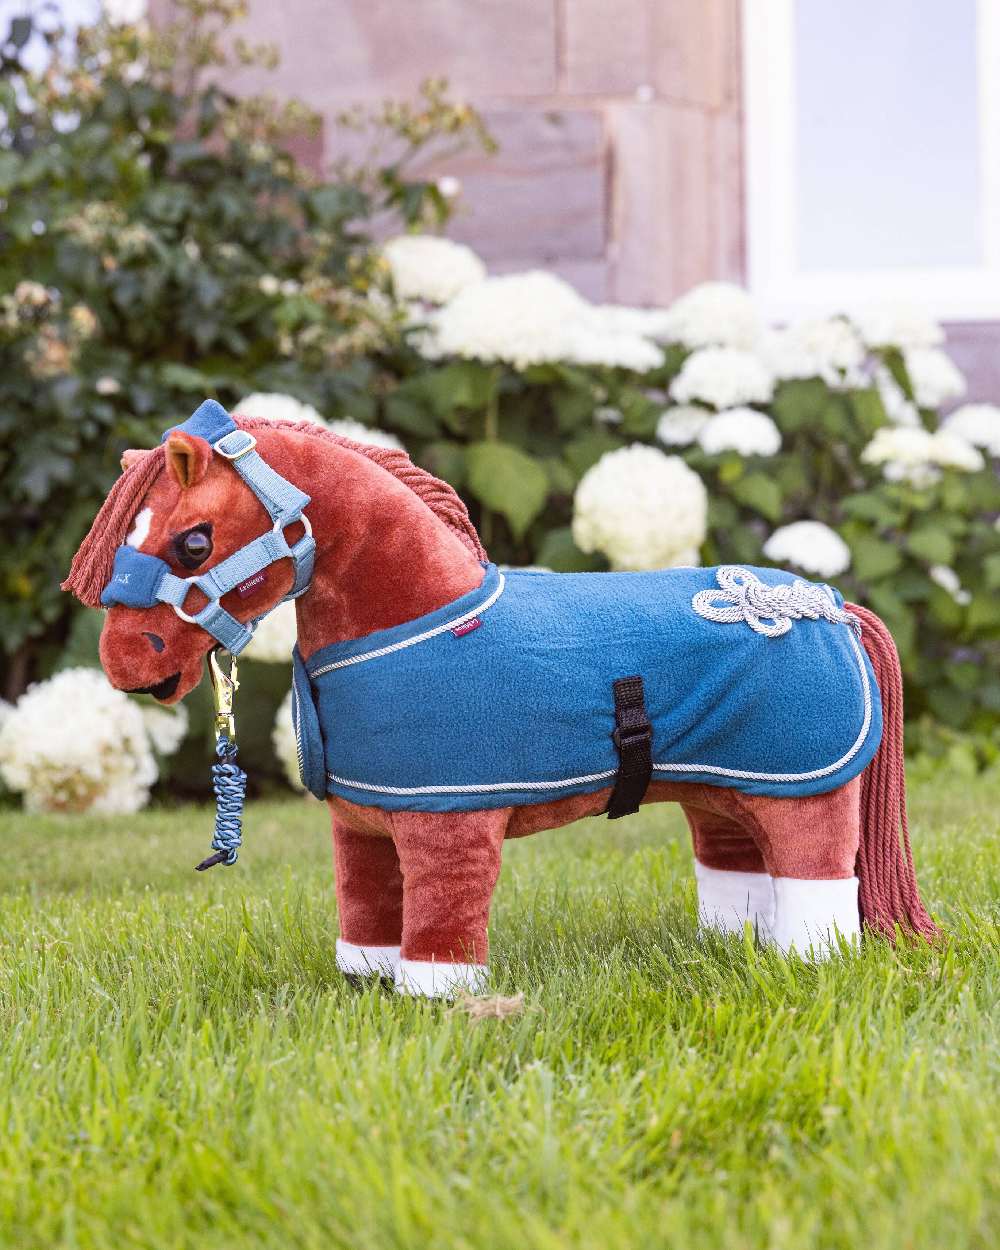 LeMieux Toy Pony thomas on garden background 